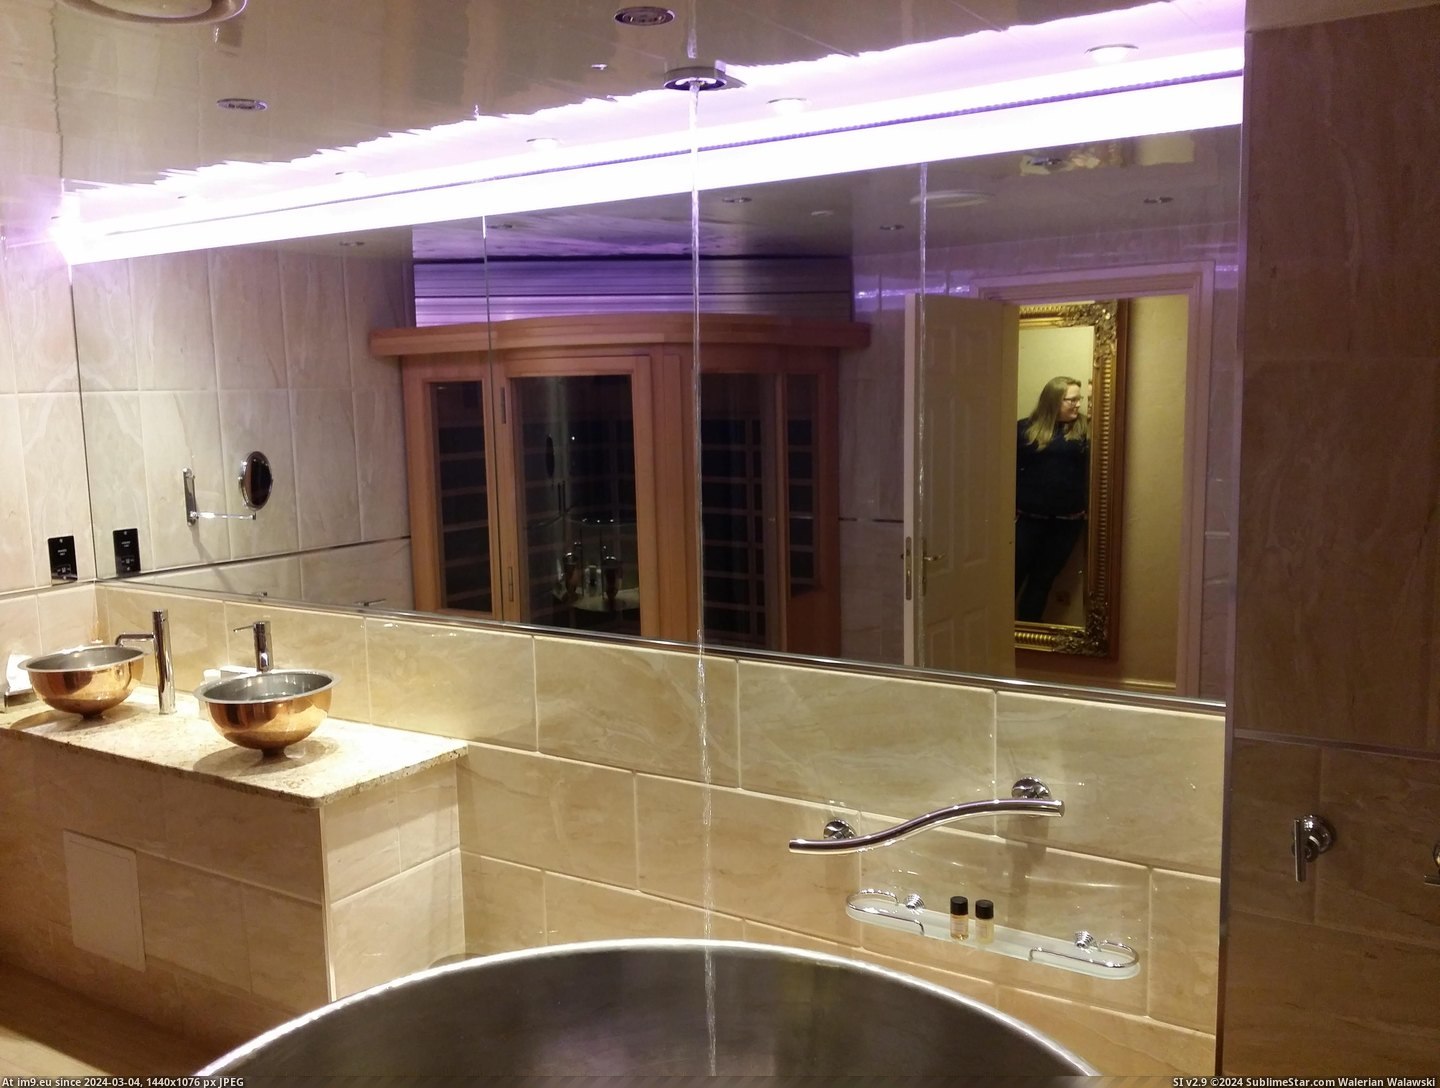 #Room #Hotel #Fills #Bath #Ceiling [Mildlyinteresting] The bath in my hotel room fills from the ceiling Pic. (Bild von album My r/MILDLYINTERESTING favs))